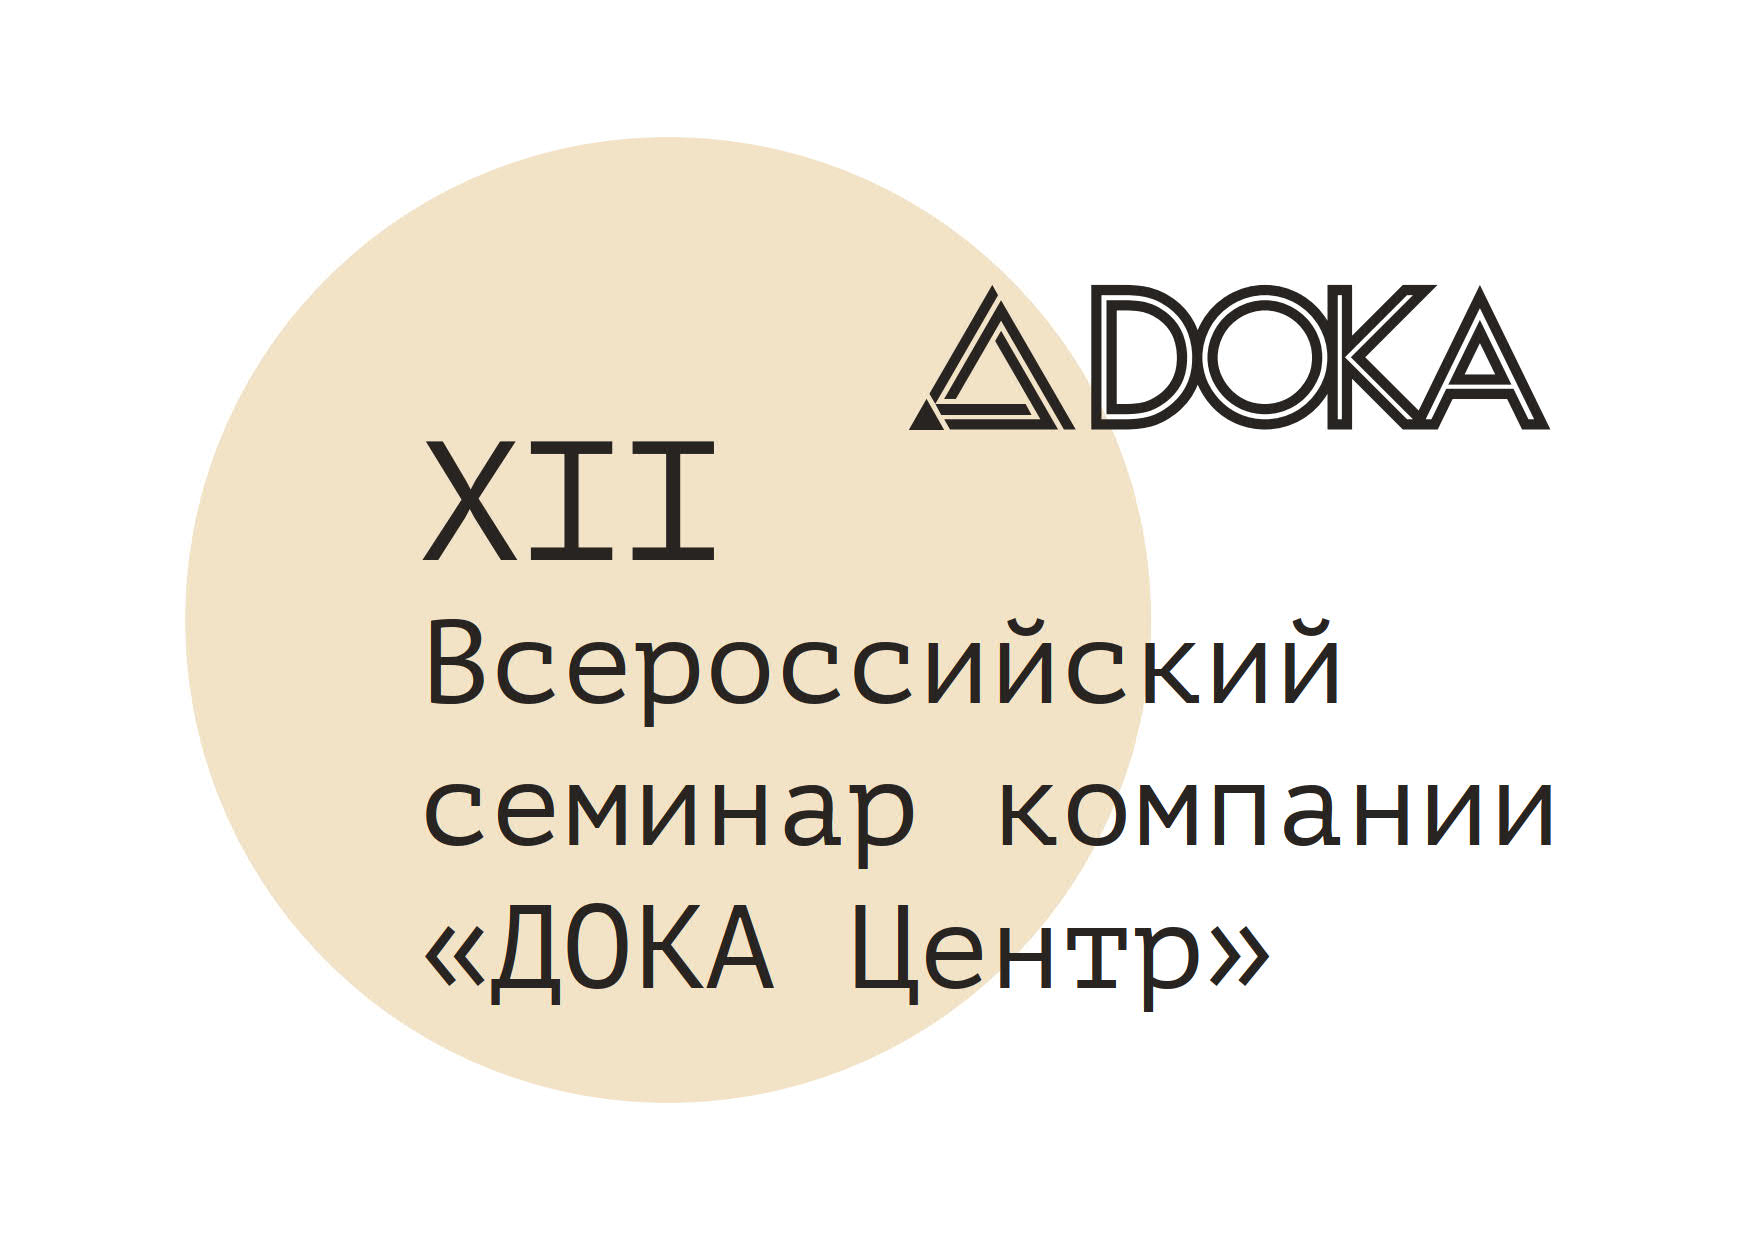 XII Всероссийский семинар компании ДОКА Центр